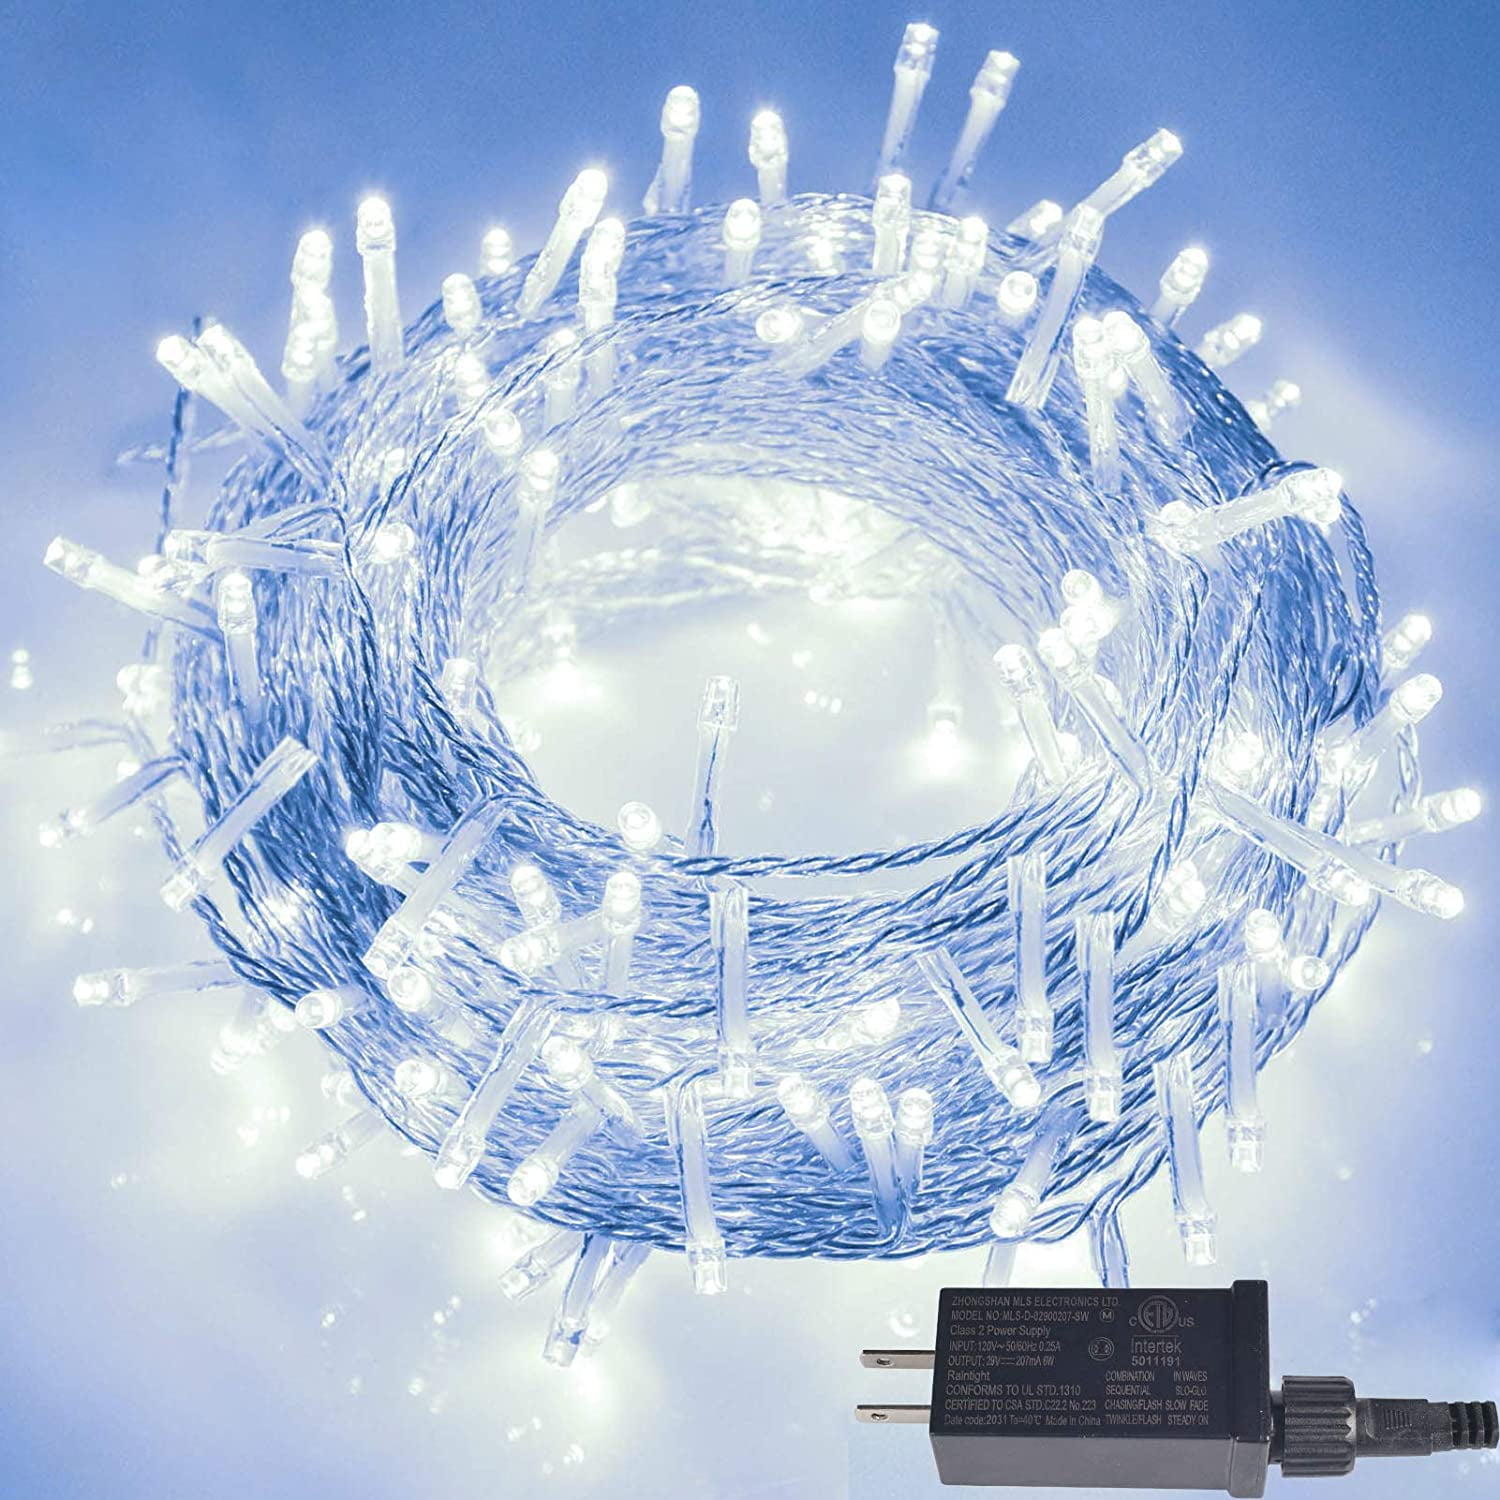 HOMEVER Smart Fairy Christmas Lights, 33FT 66LED Waterproof String